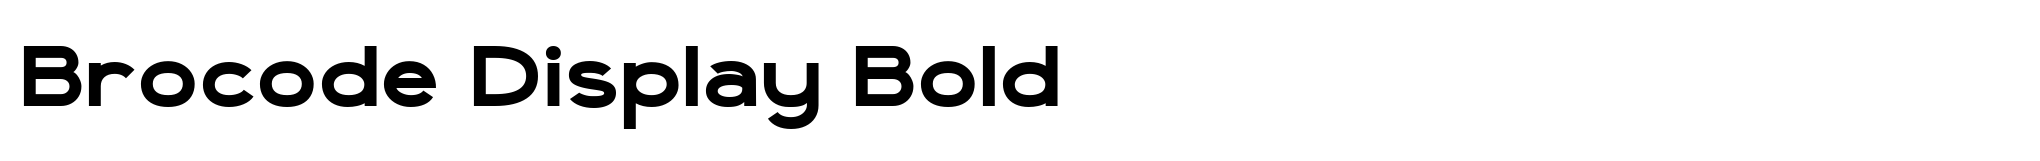 Brocode Display Bold image